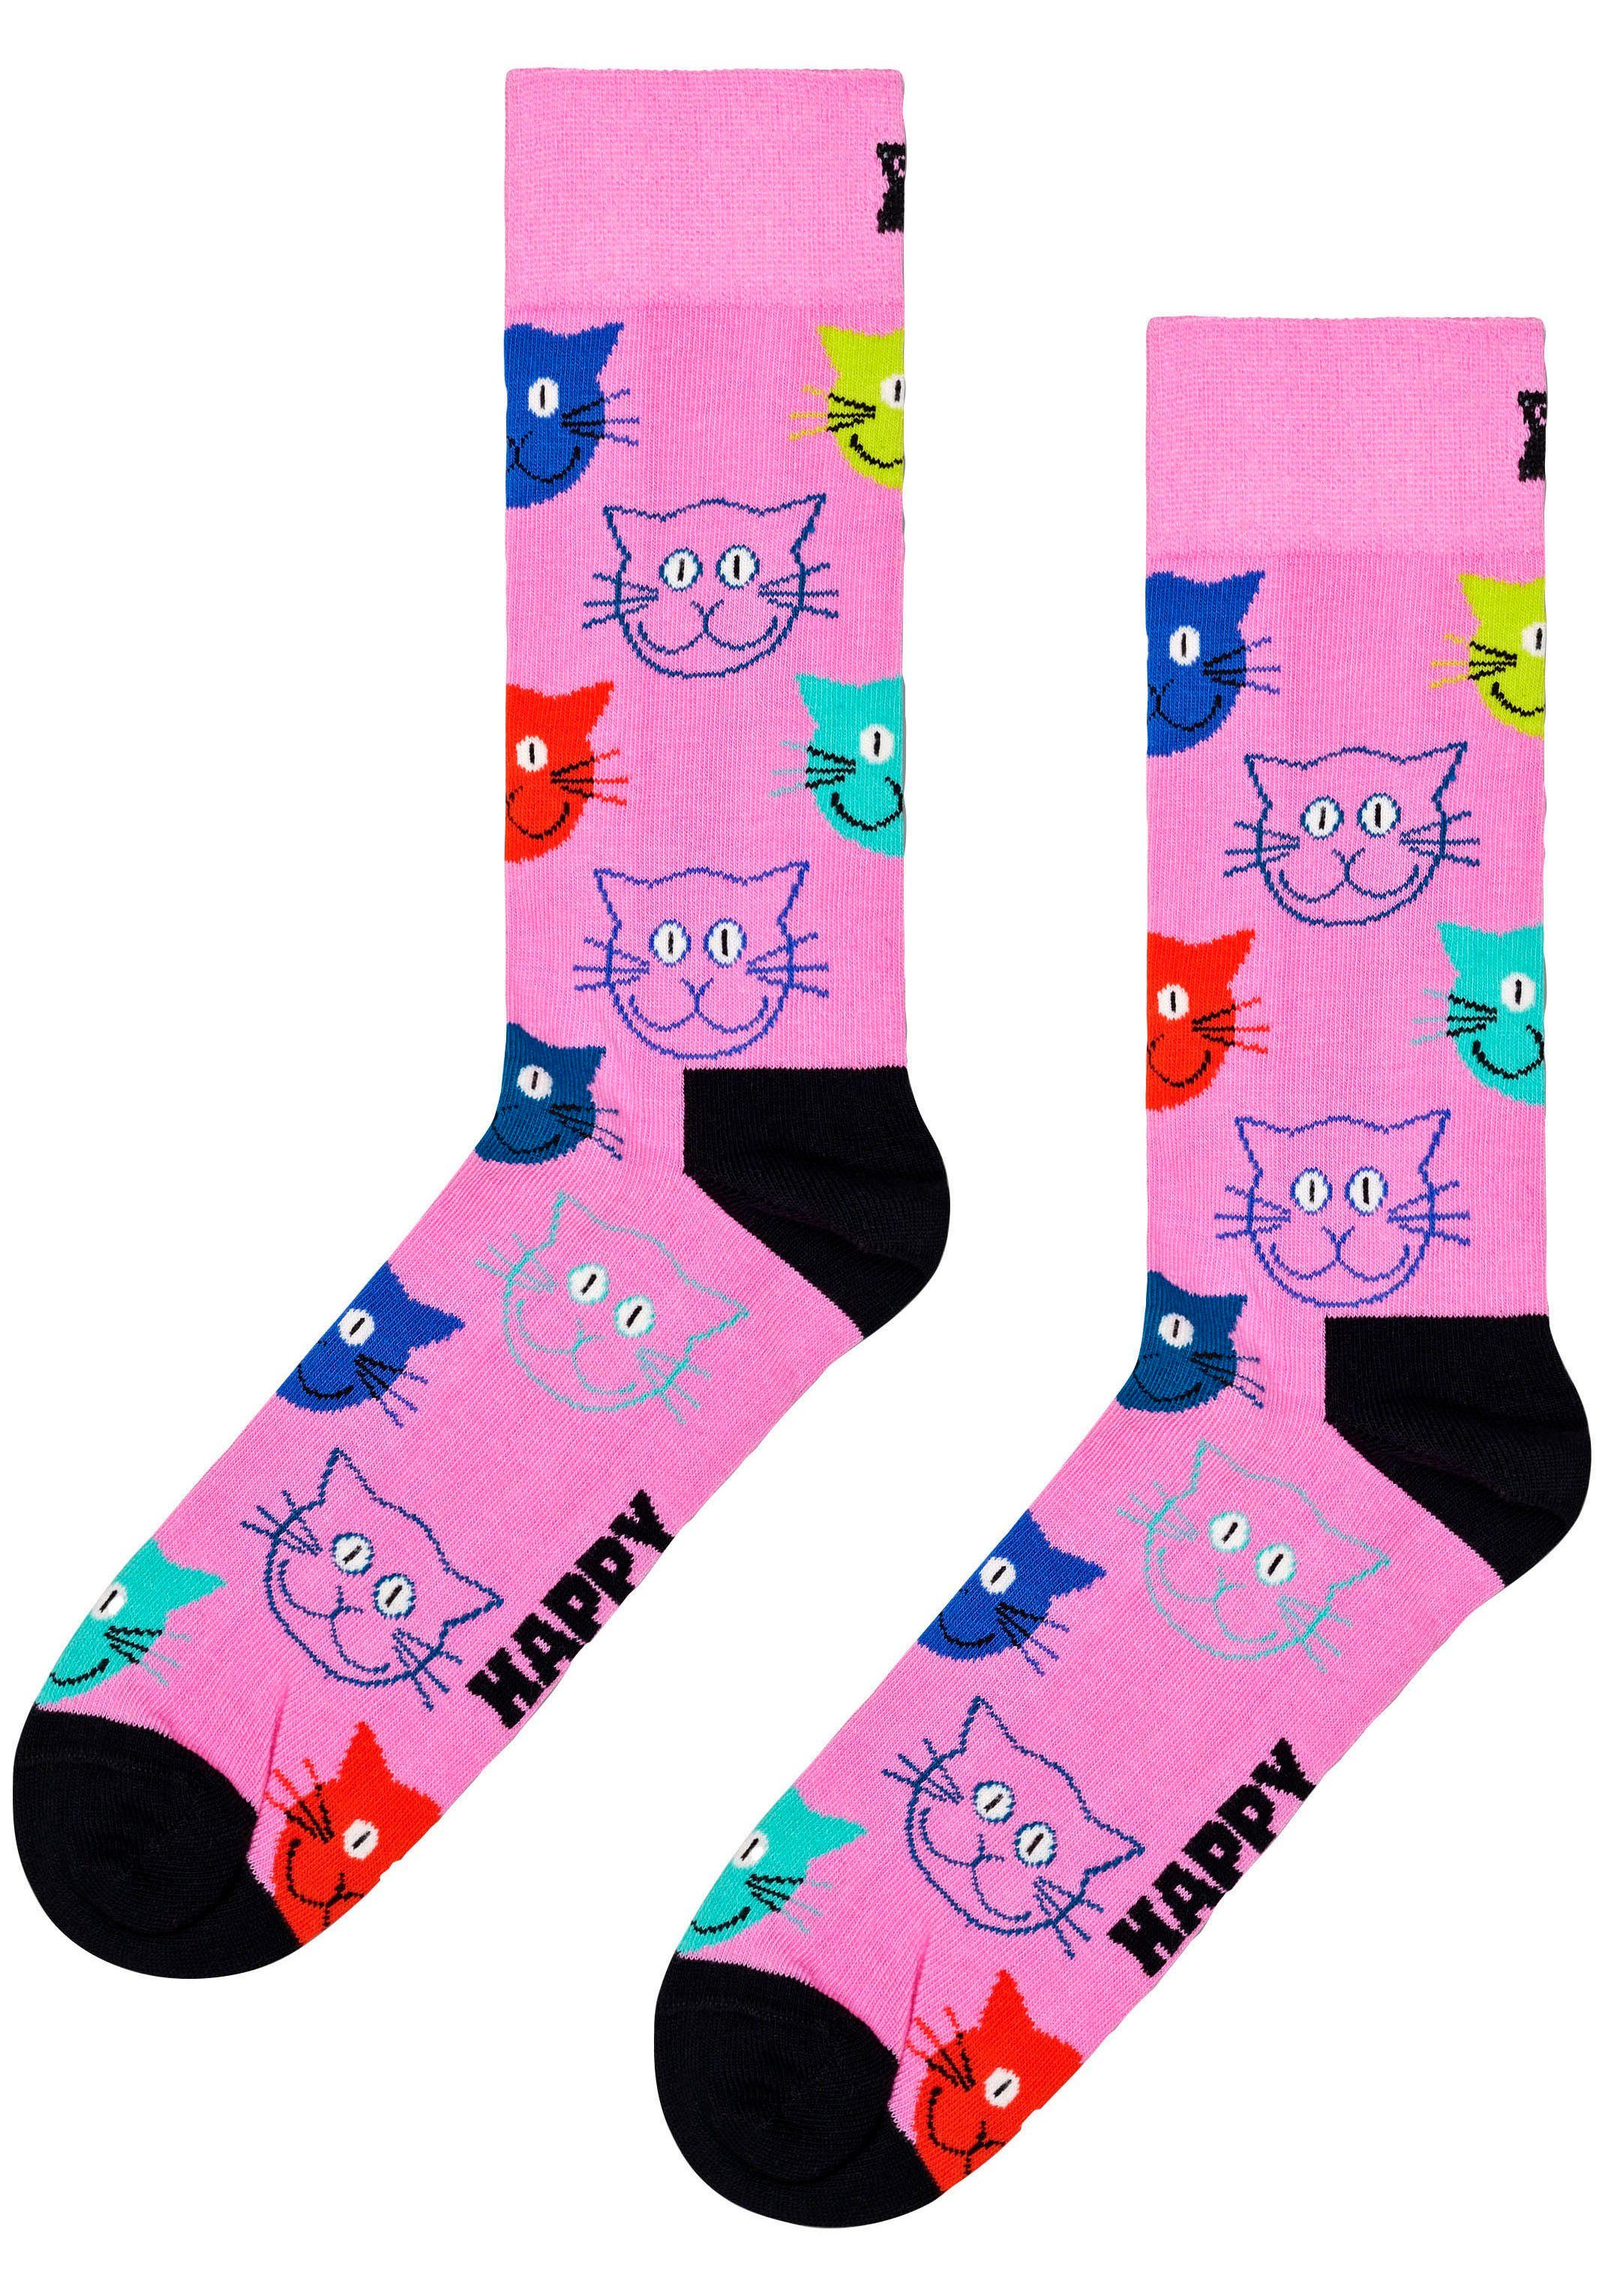 Happy Socks Socken 3-Pack Mixed Mixed Socks Katzen-Motive Gift Set 3-Paar) Cat (Packung, Cat 2